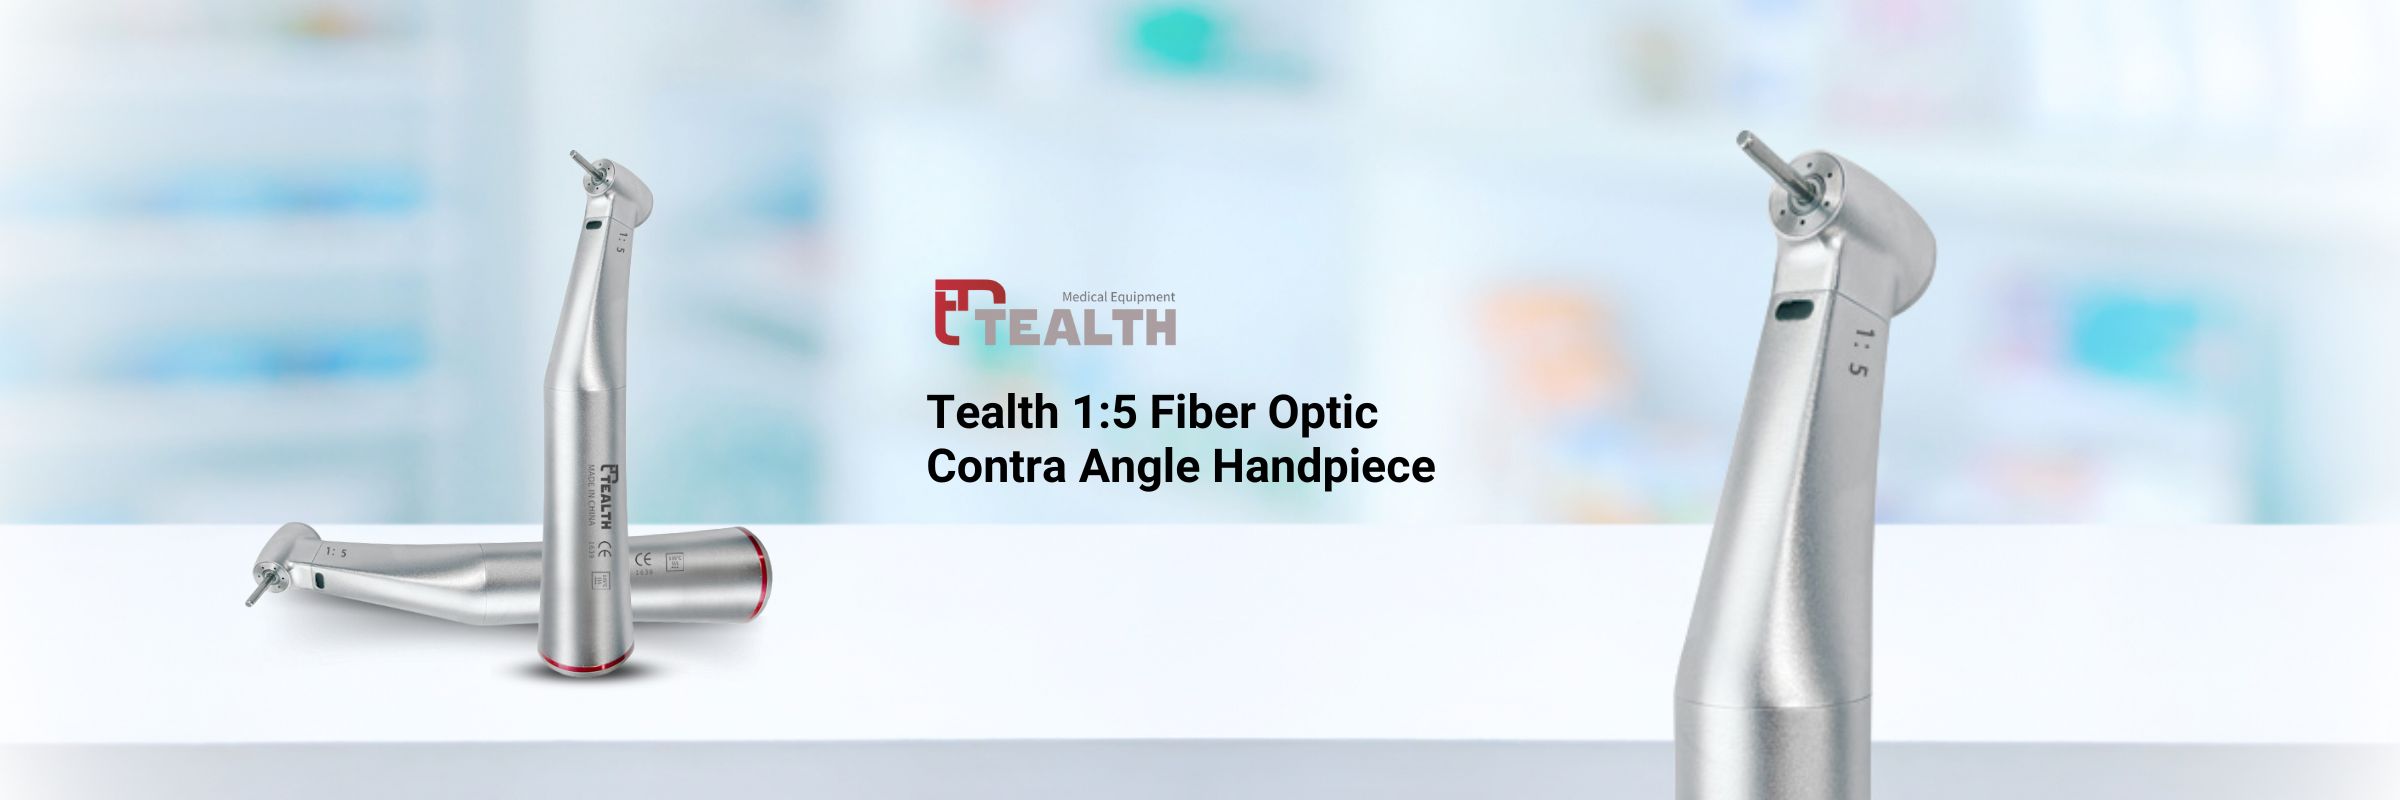 Tealth 1:5 Fiber Optic Contra Angle Handpiece